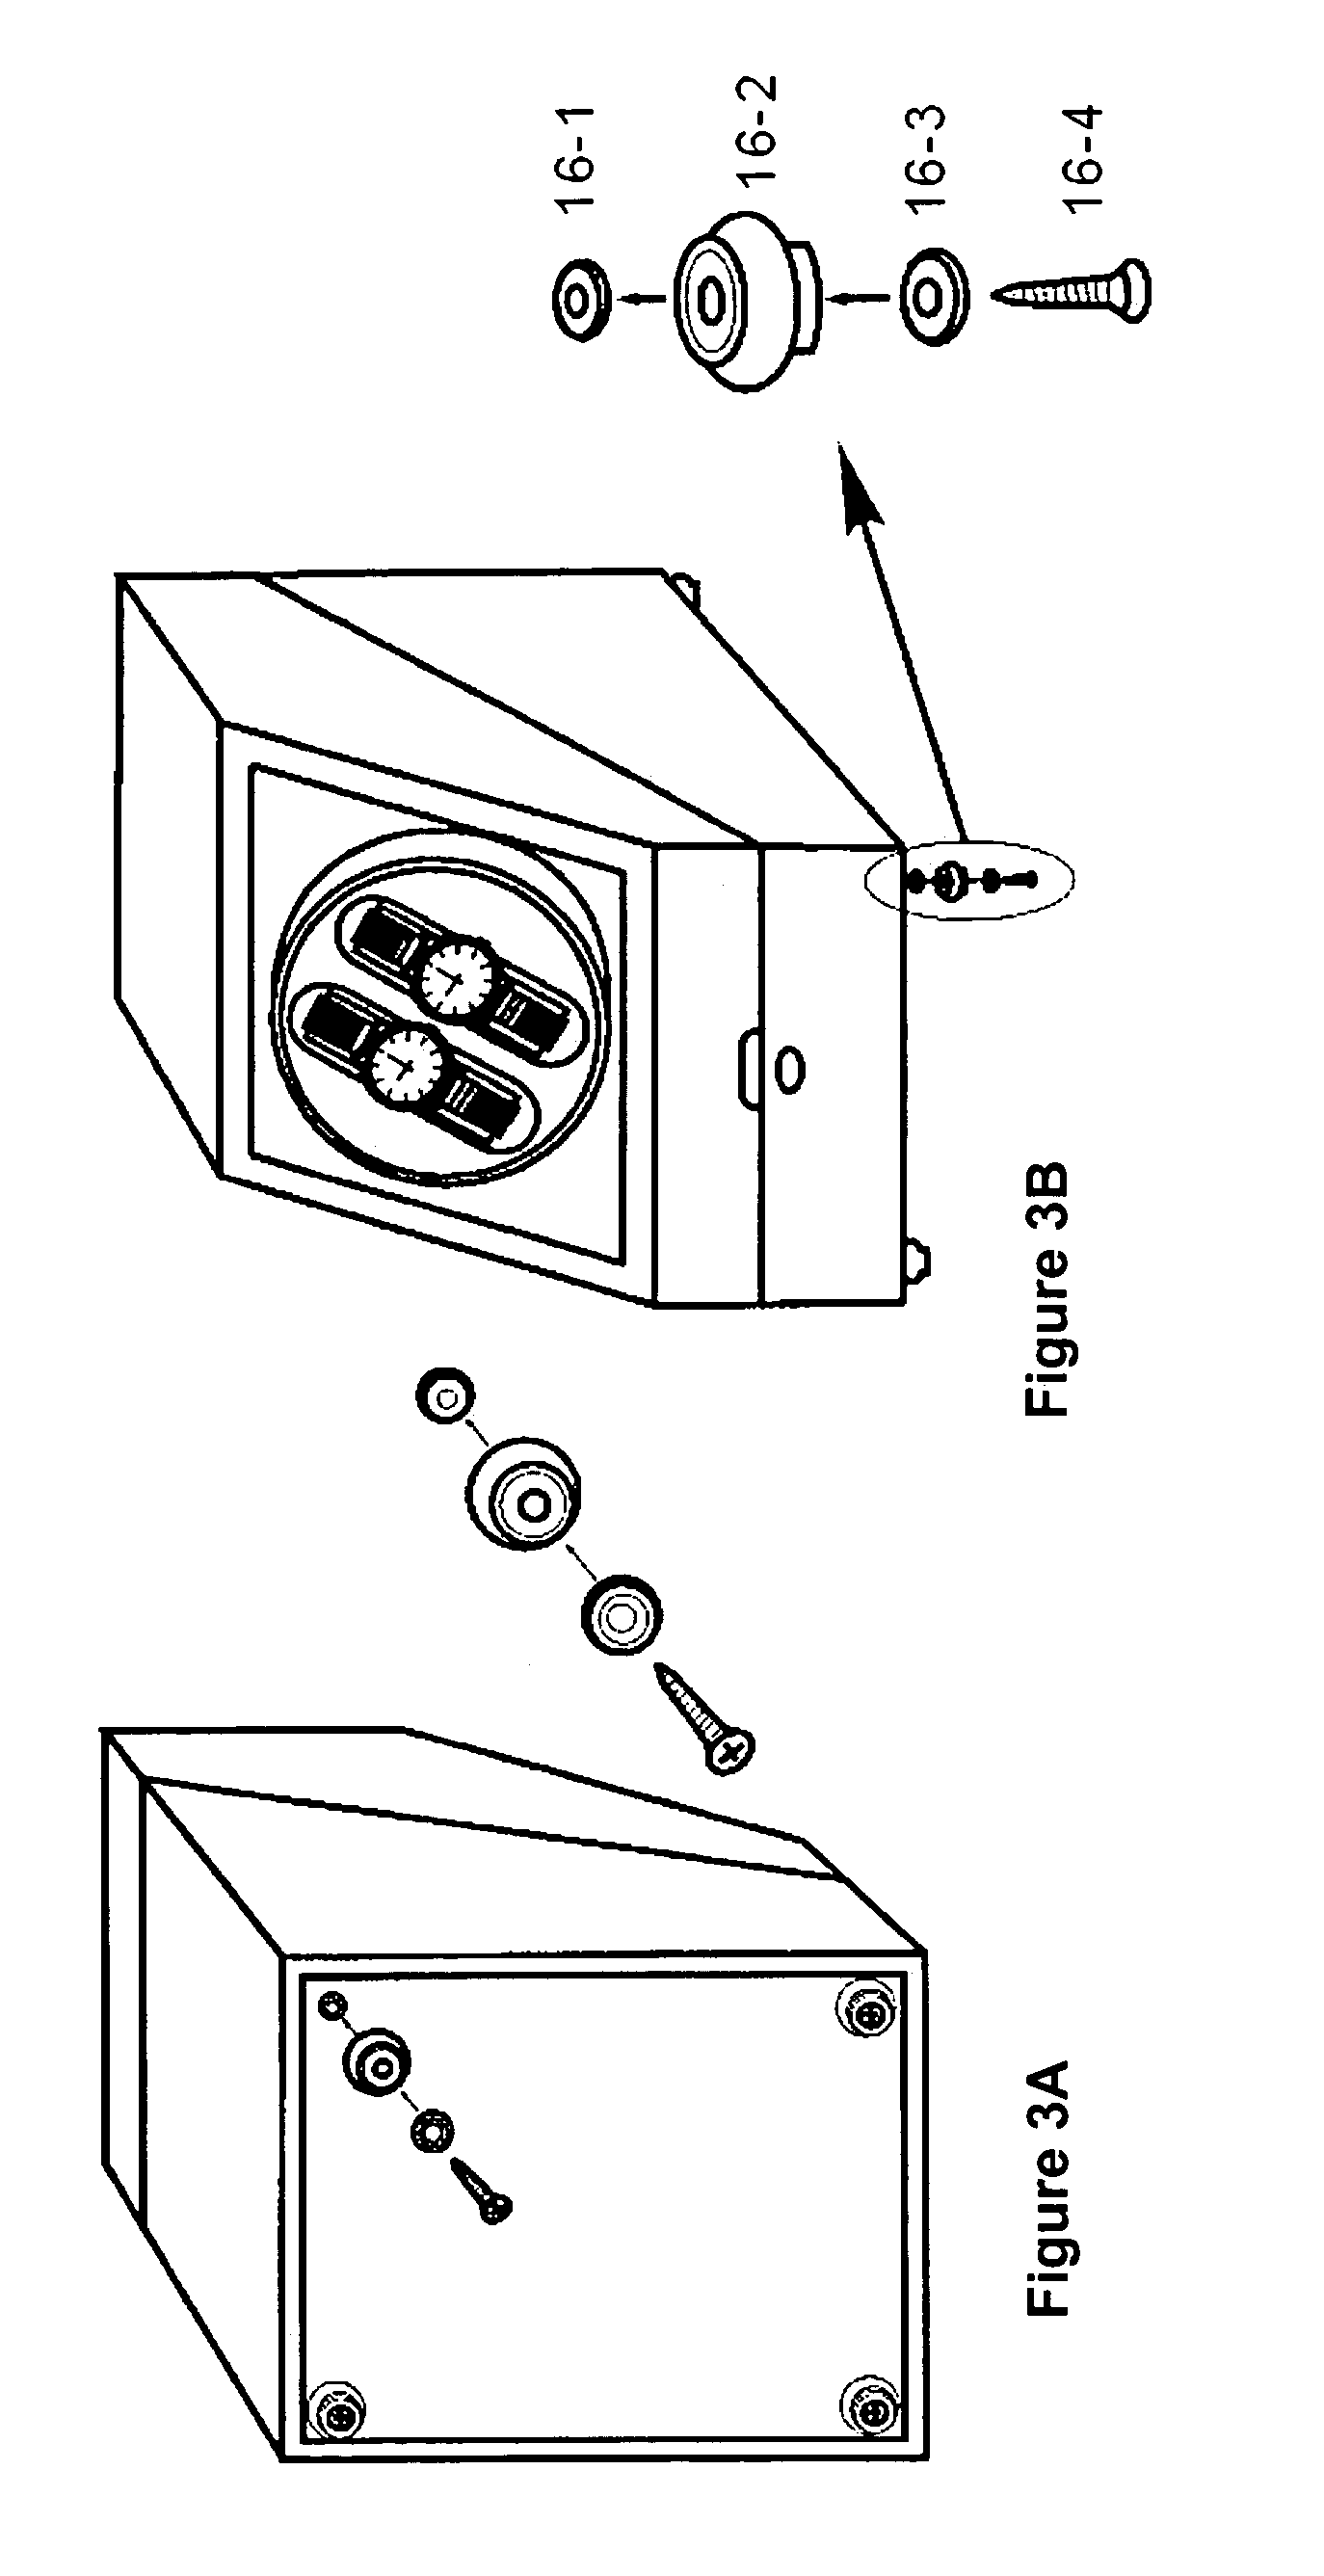 Watch-winding apparatus